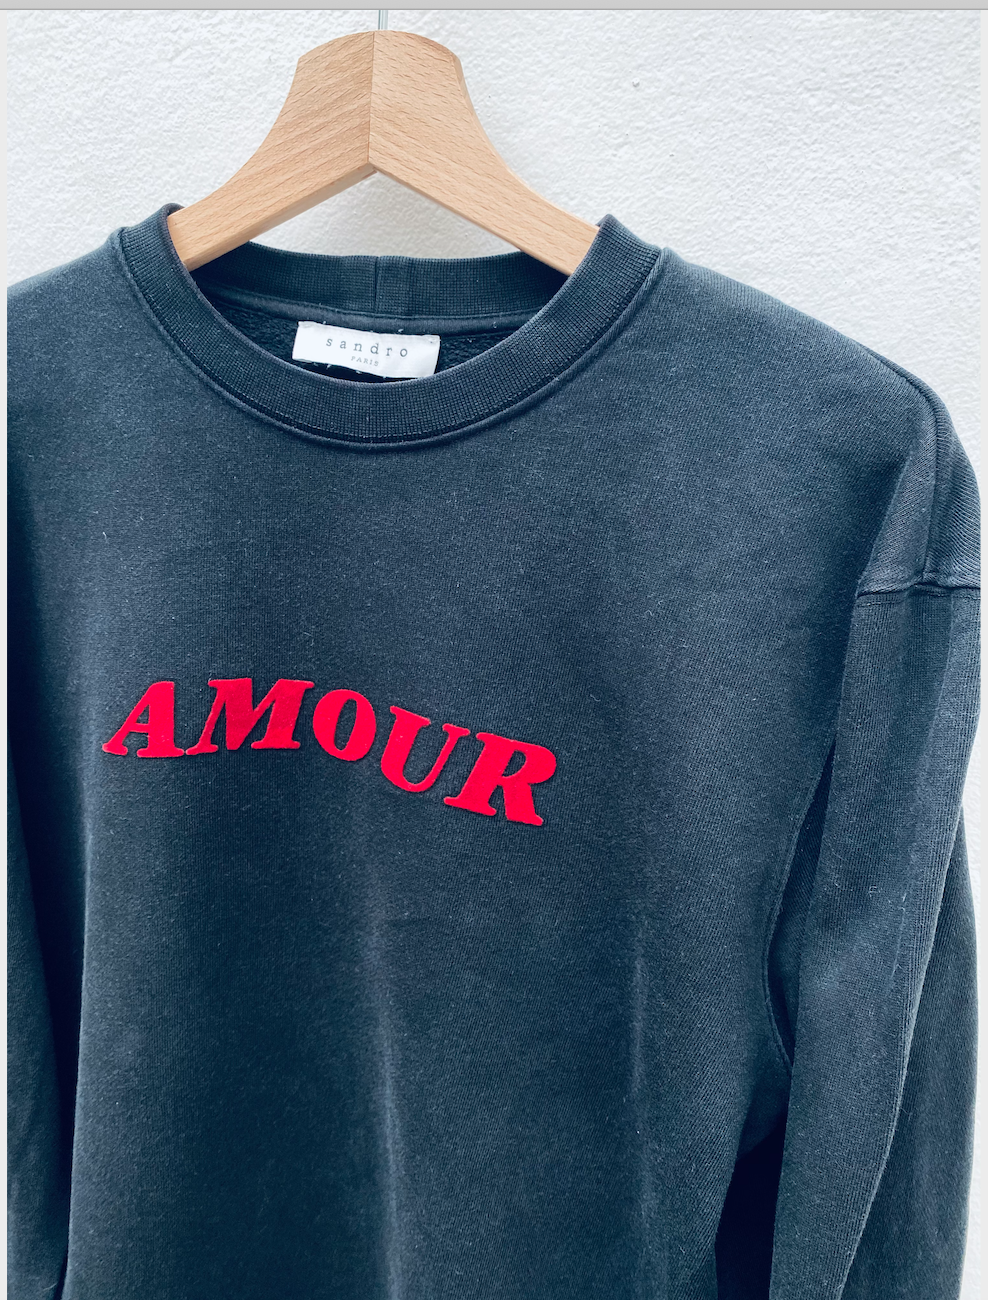 Sandro « Amour » Black Sweater Size M